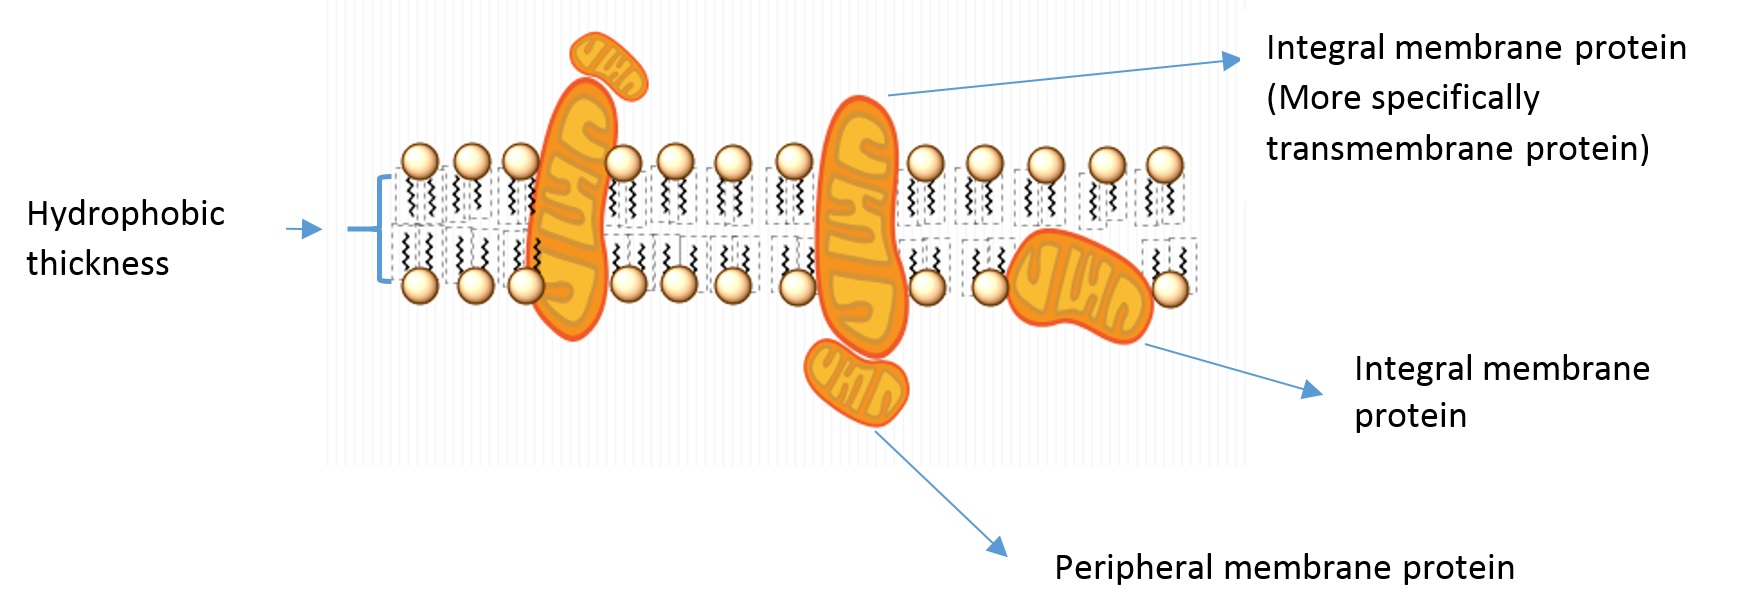 membrane proteins.jpg